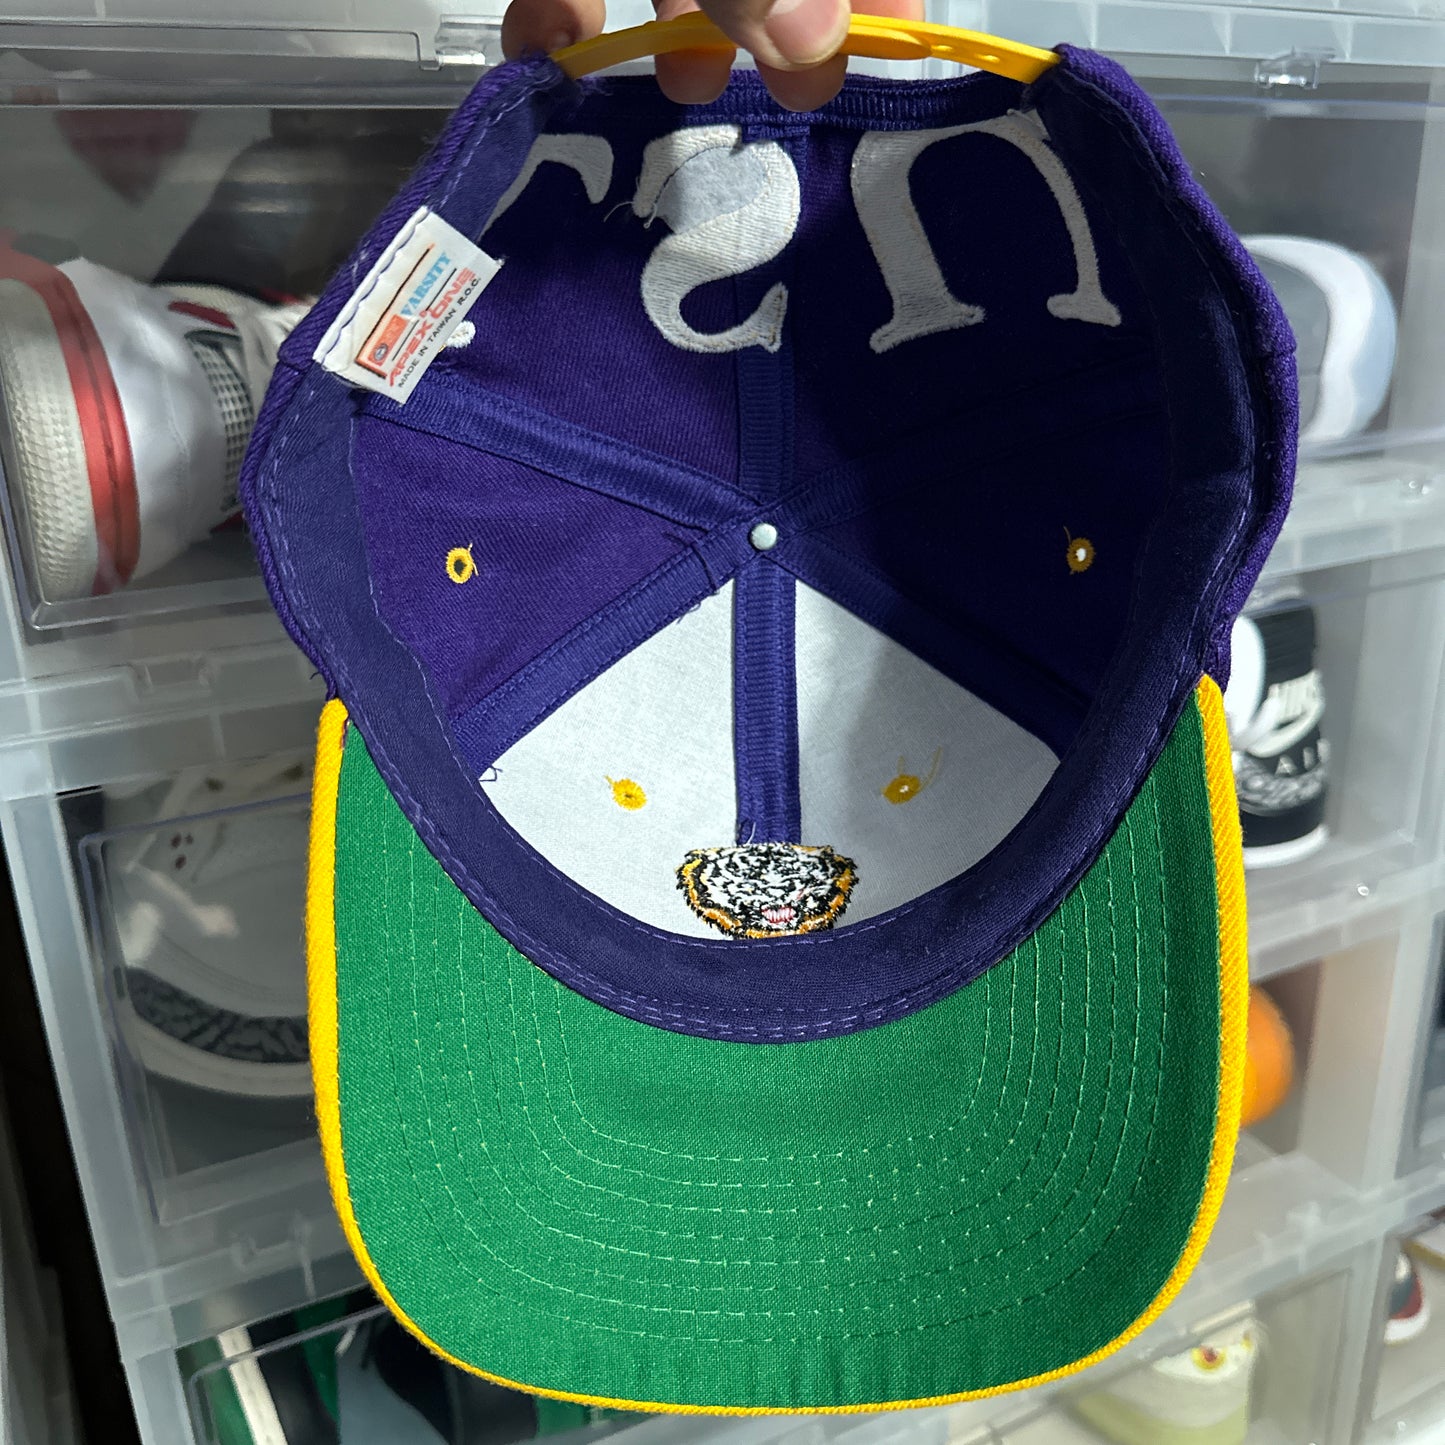 Vintage 90s LSU Tigers Embroidered Logo Snapback Hat